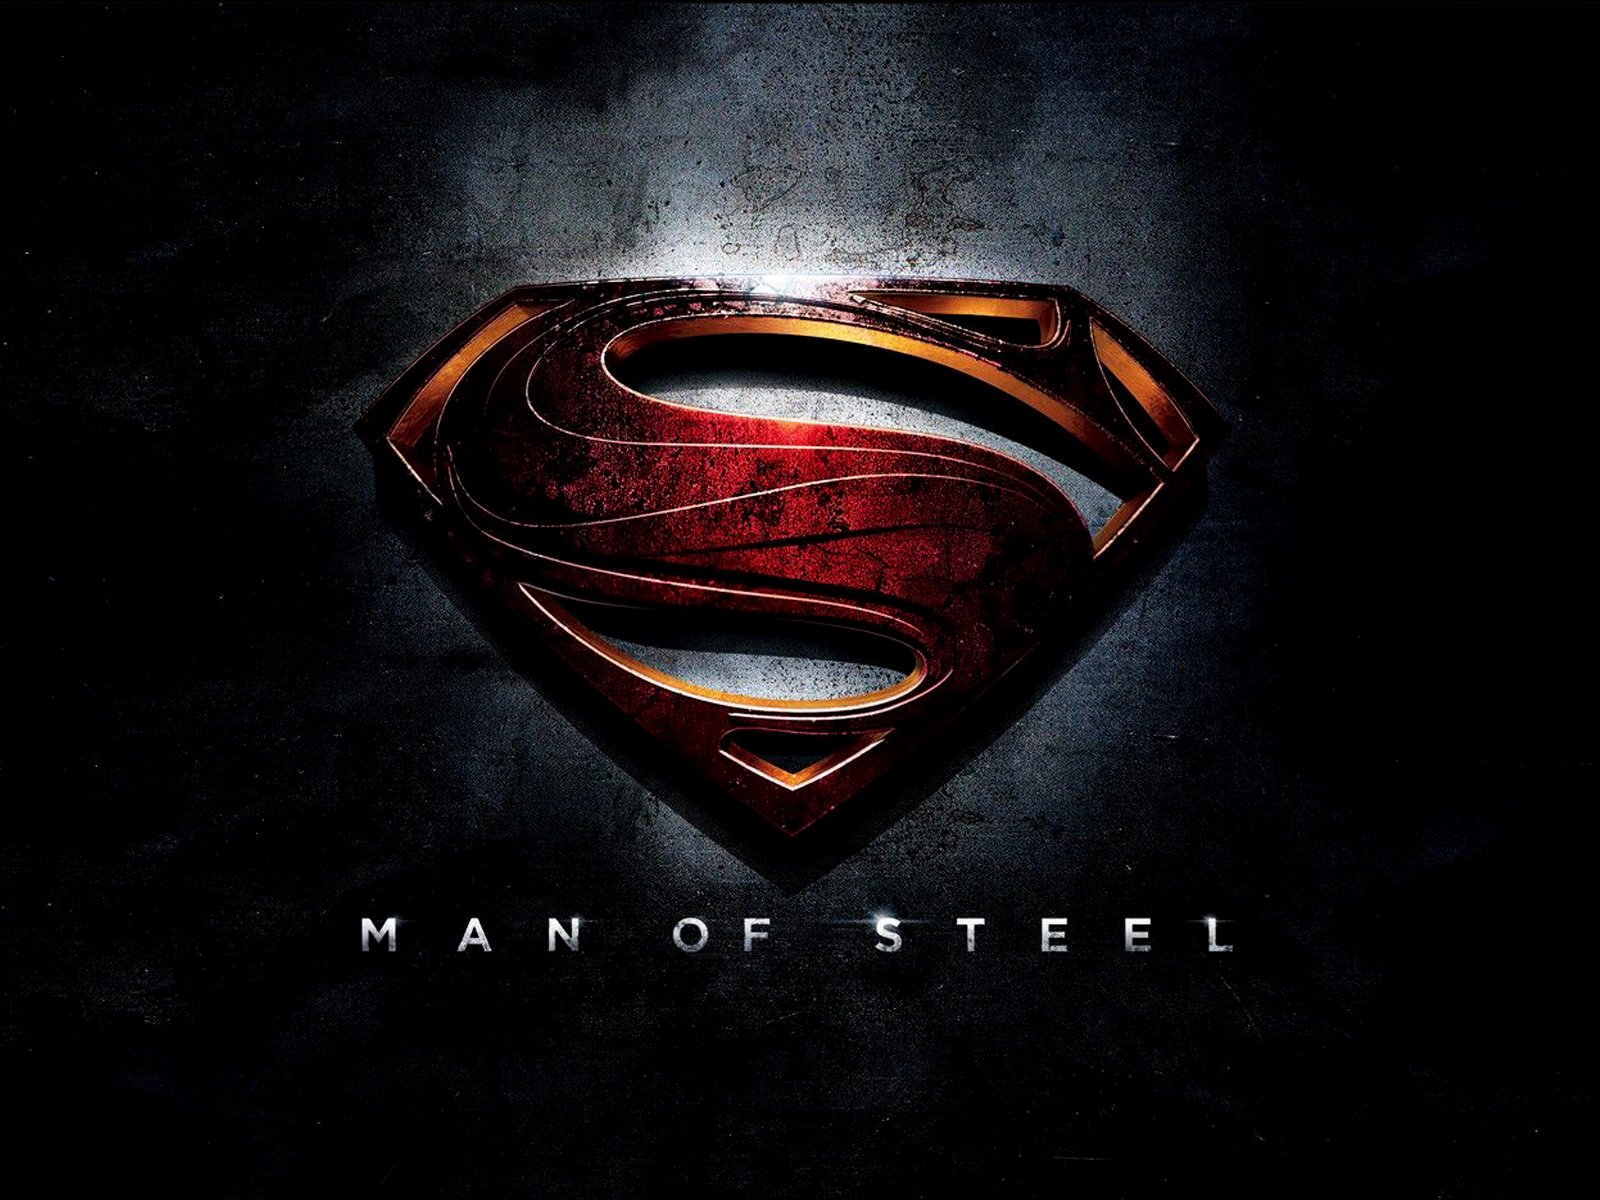 of Steel Superman 2013 HD Wallpapers Download Free Wallpapers in HD